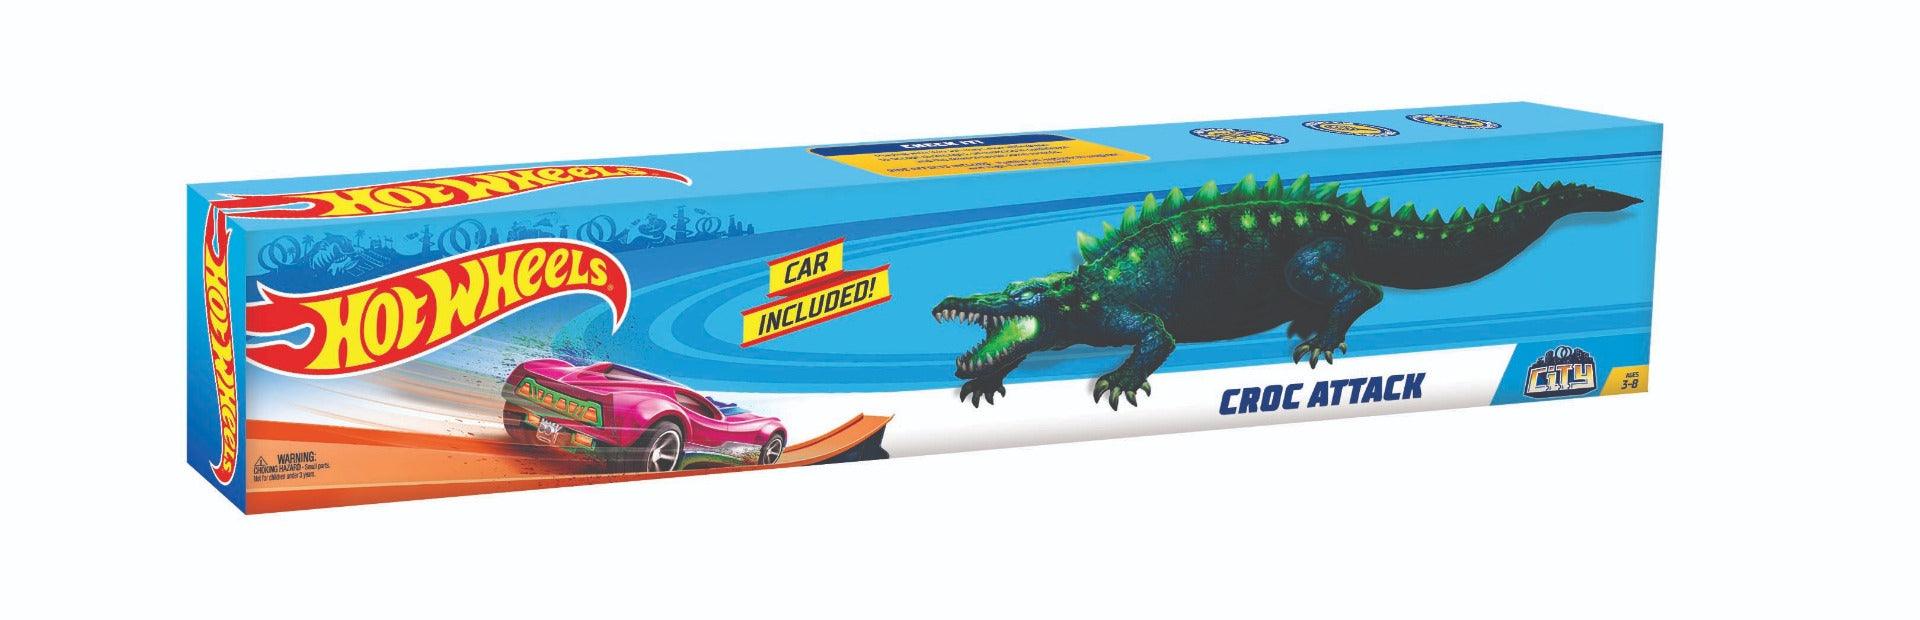 Hot Wheels Croc Attack Vehicle Playset